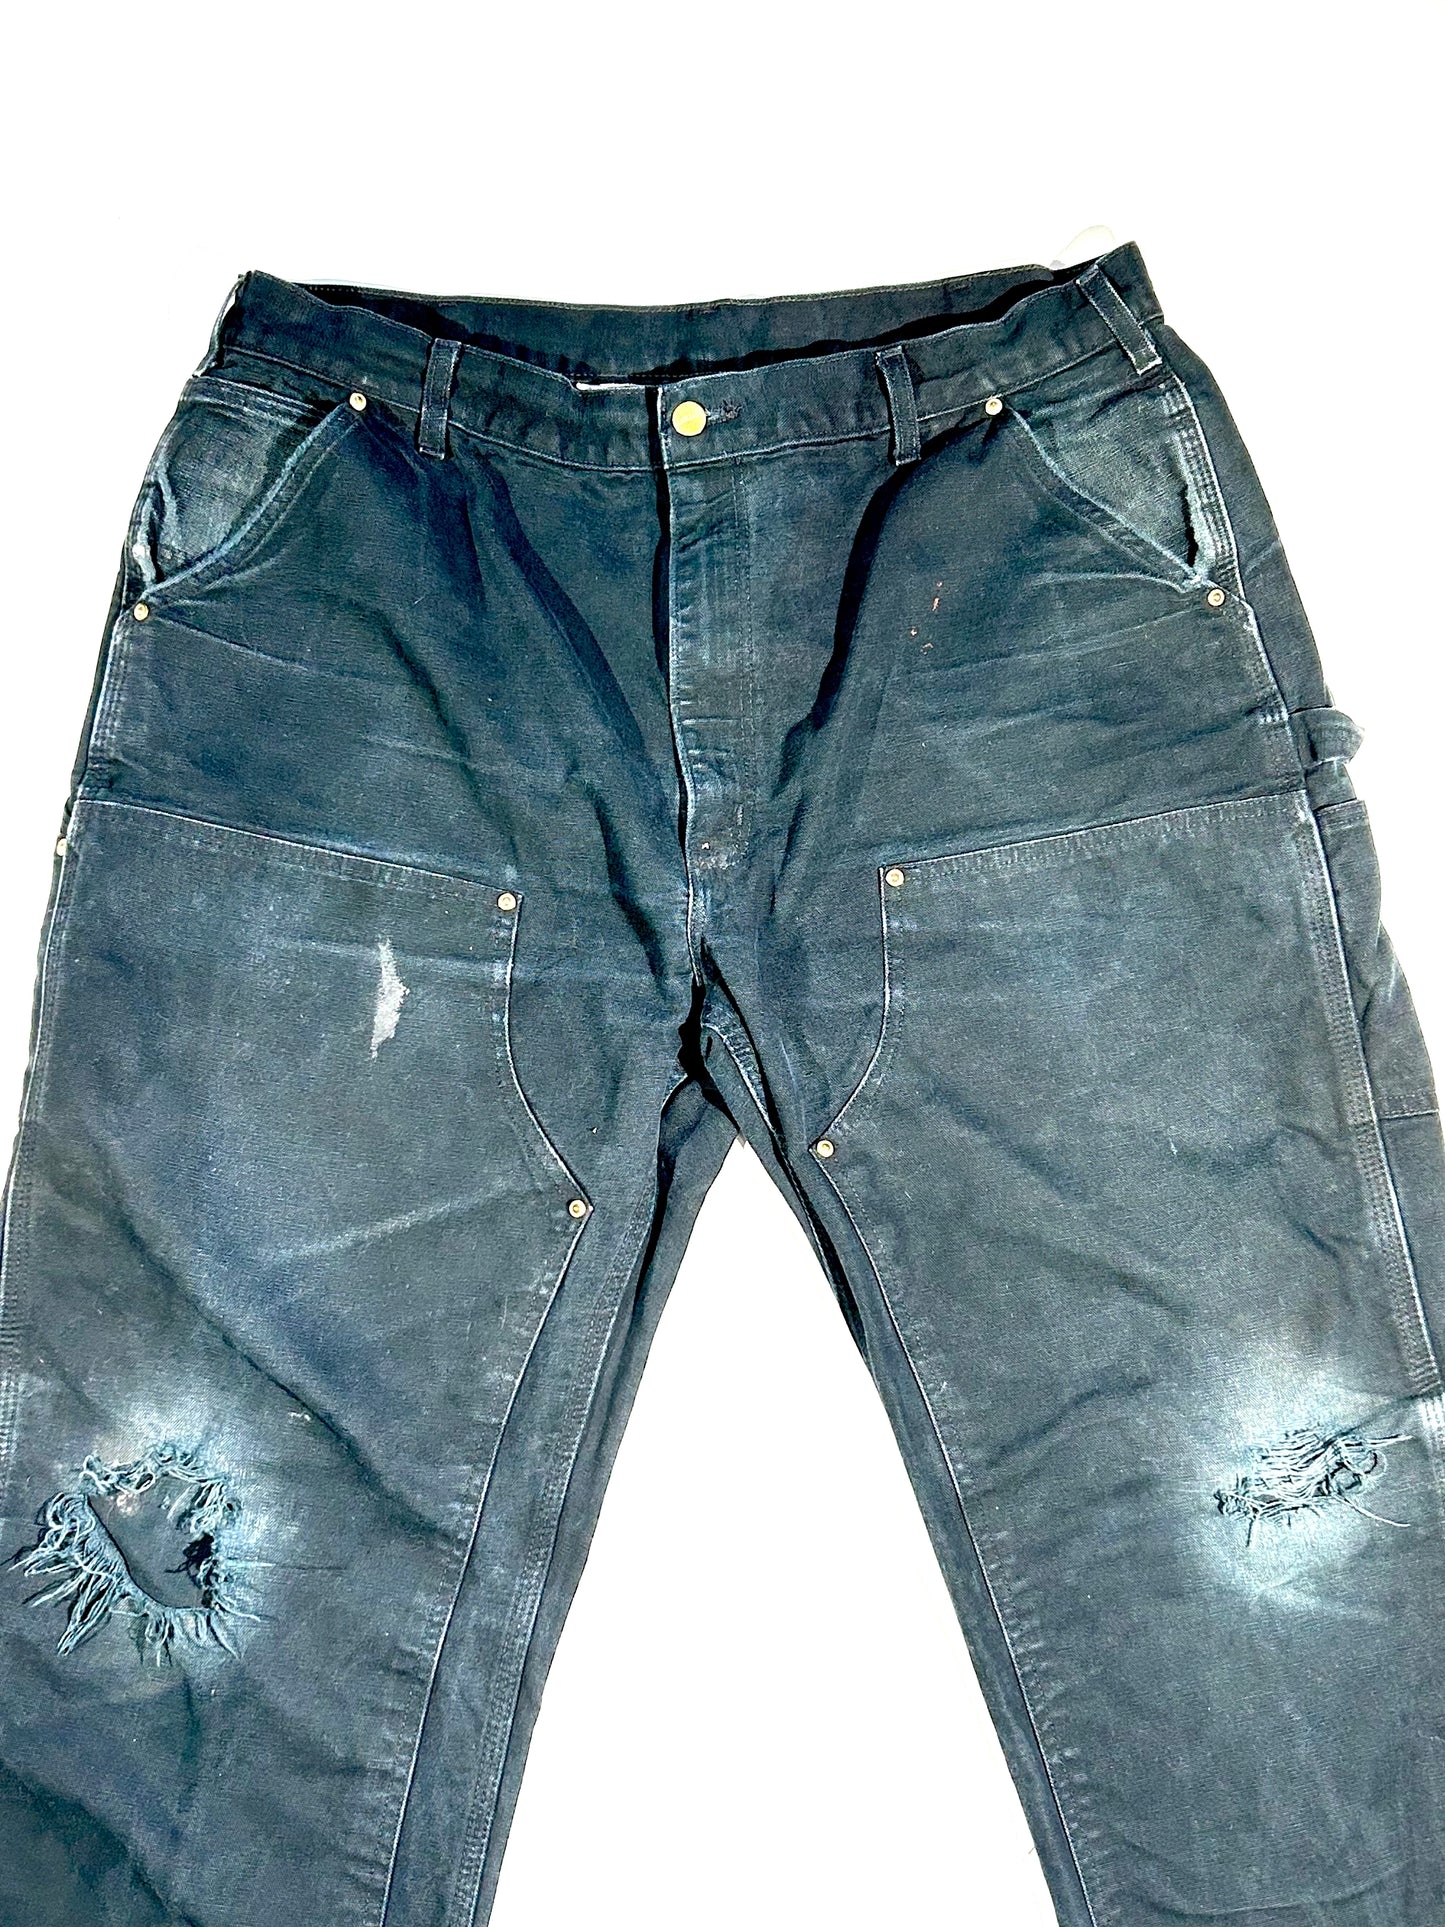 Vintage Carhartt Pants Double Knee Bottoms Cargos USA Made